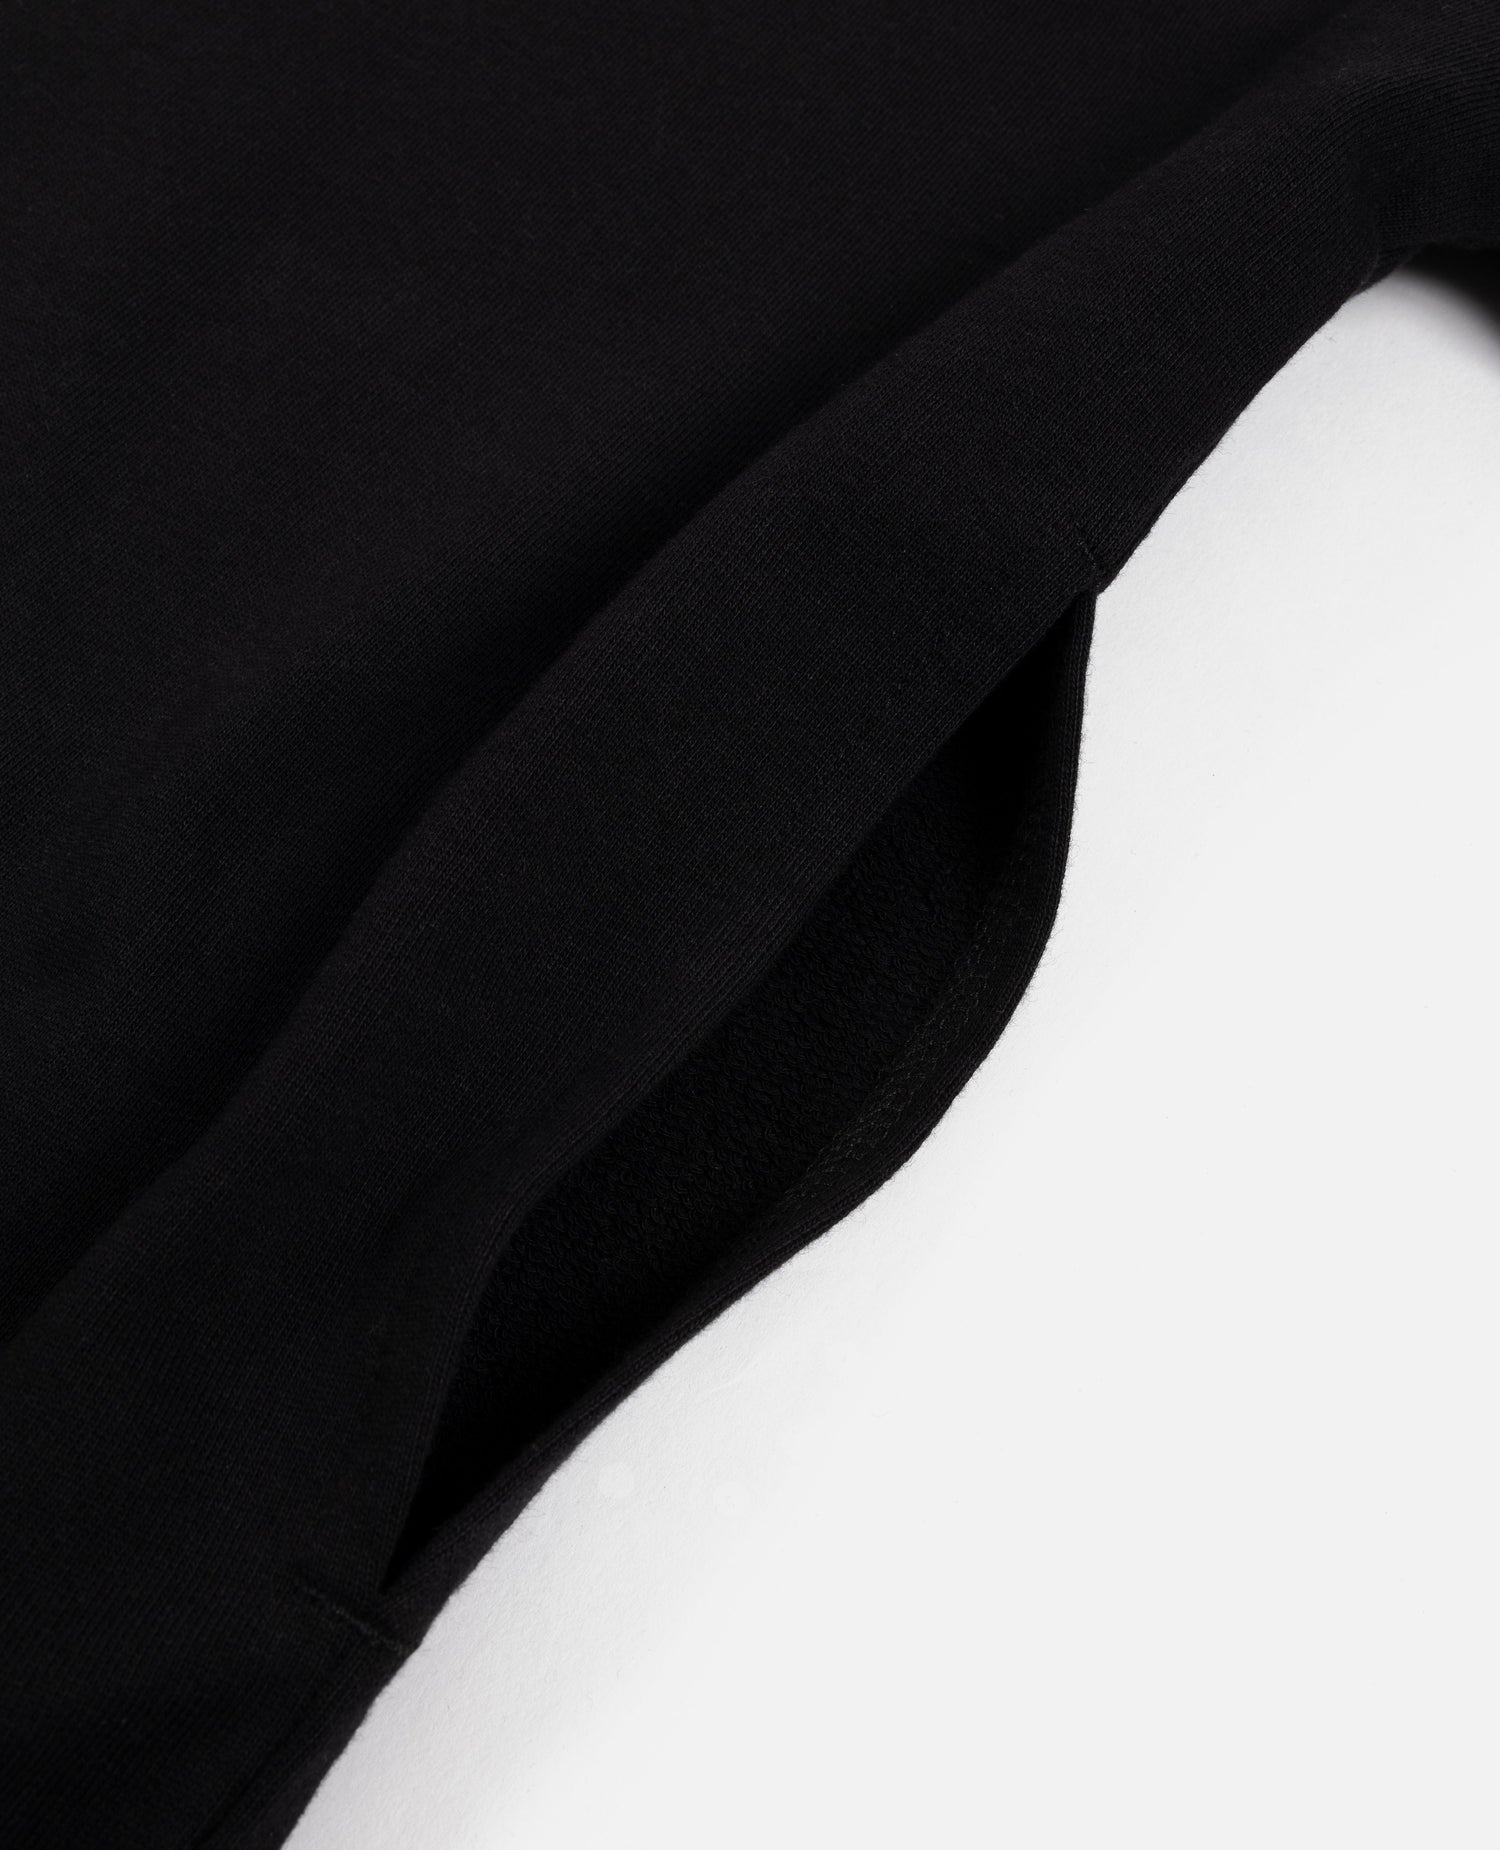 Patta x Andy Wahloo (Hassan Hajjaj) Full Length Hooded Sweater (Black)